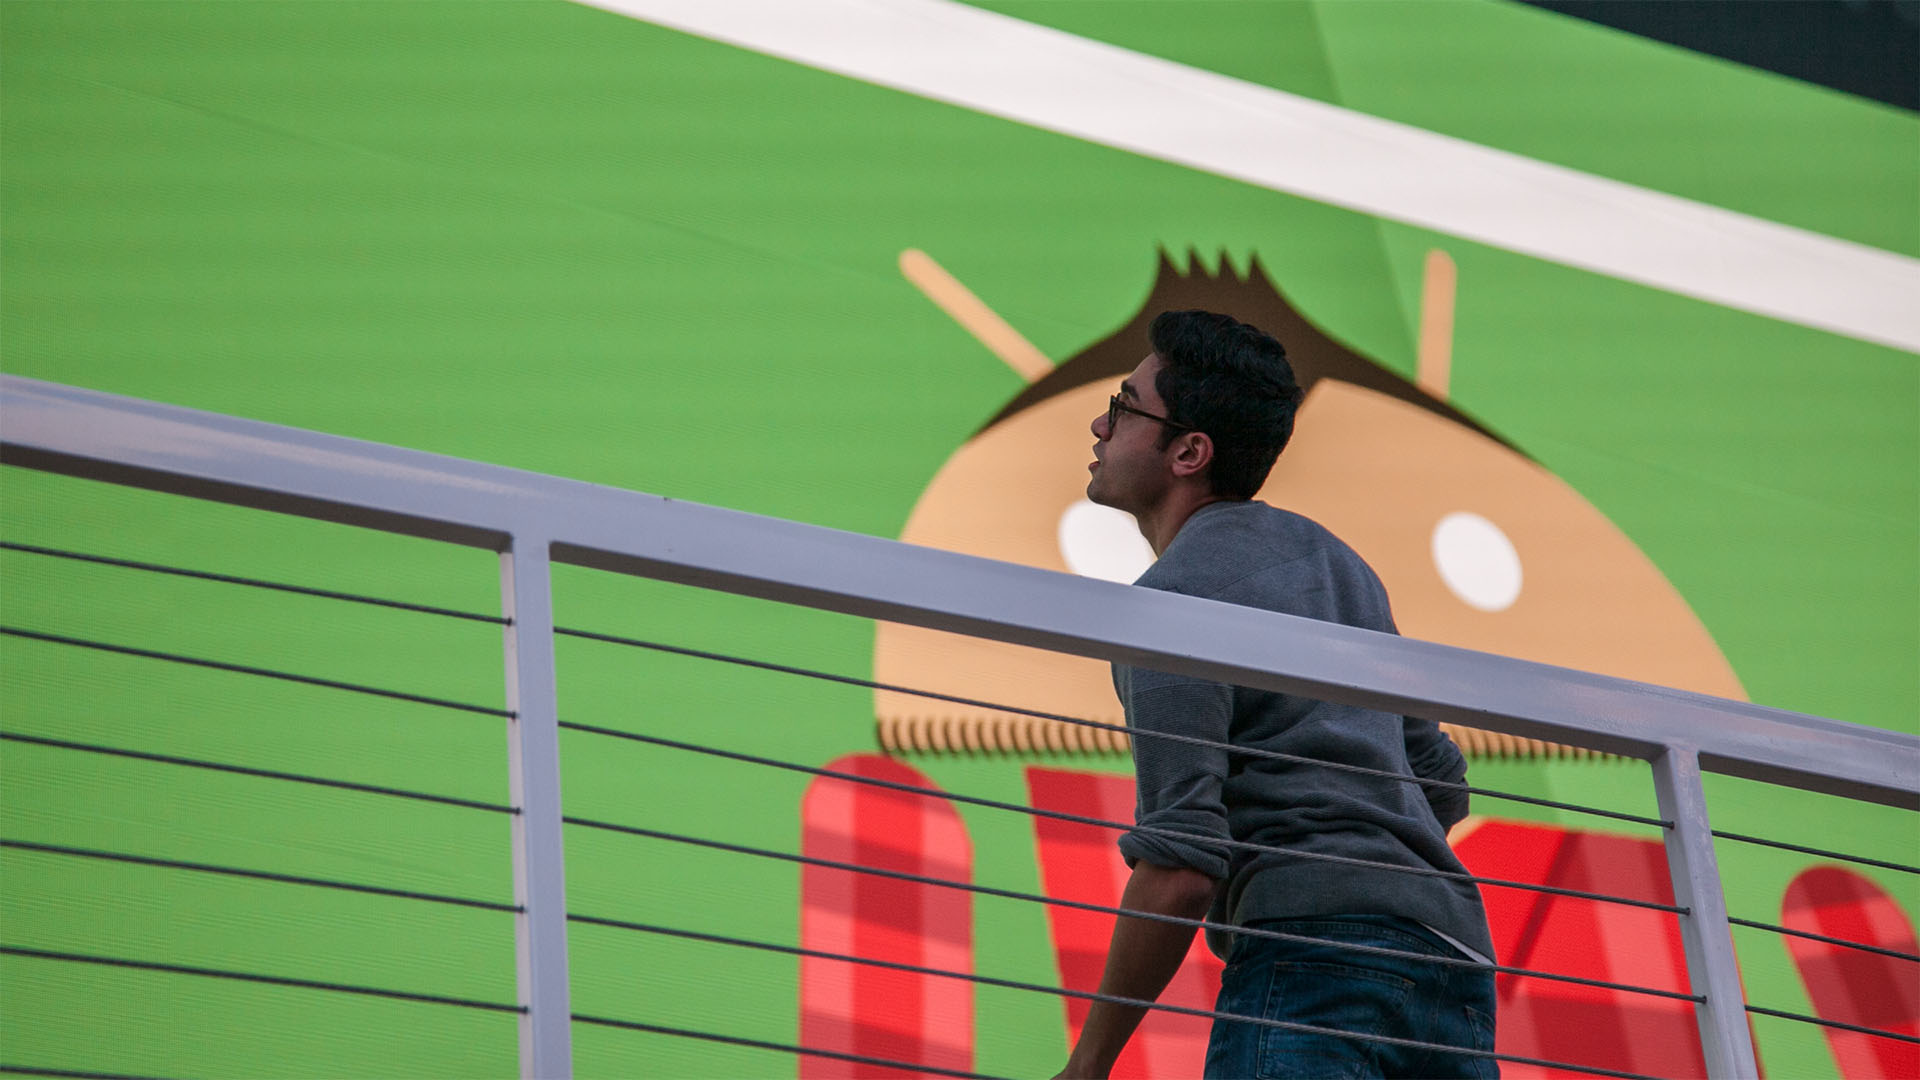 Google Androidify Kinect Game: Soccer